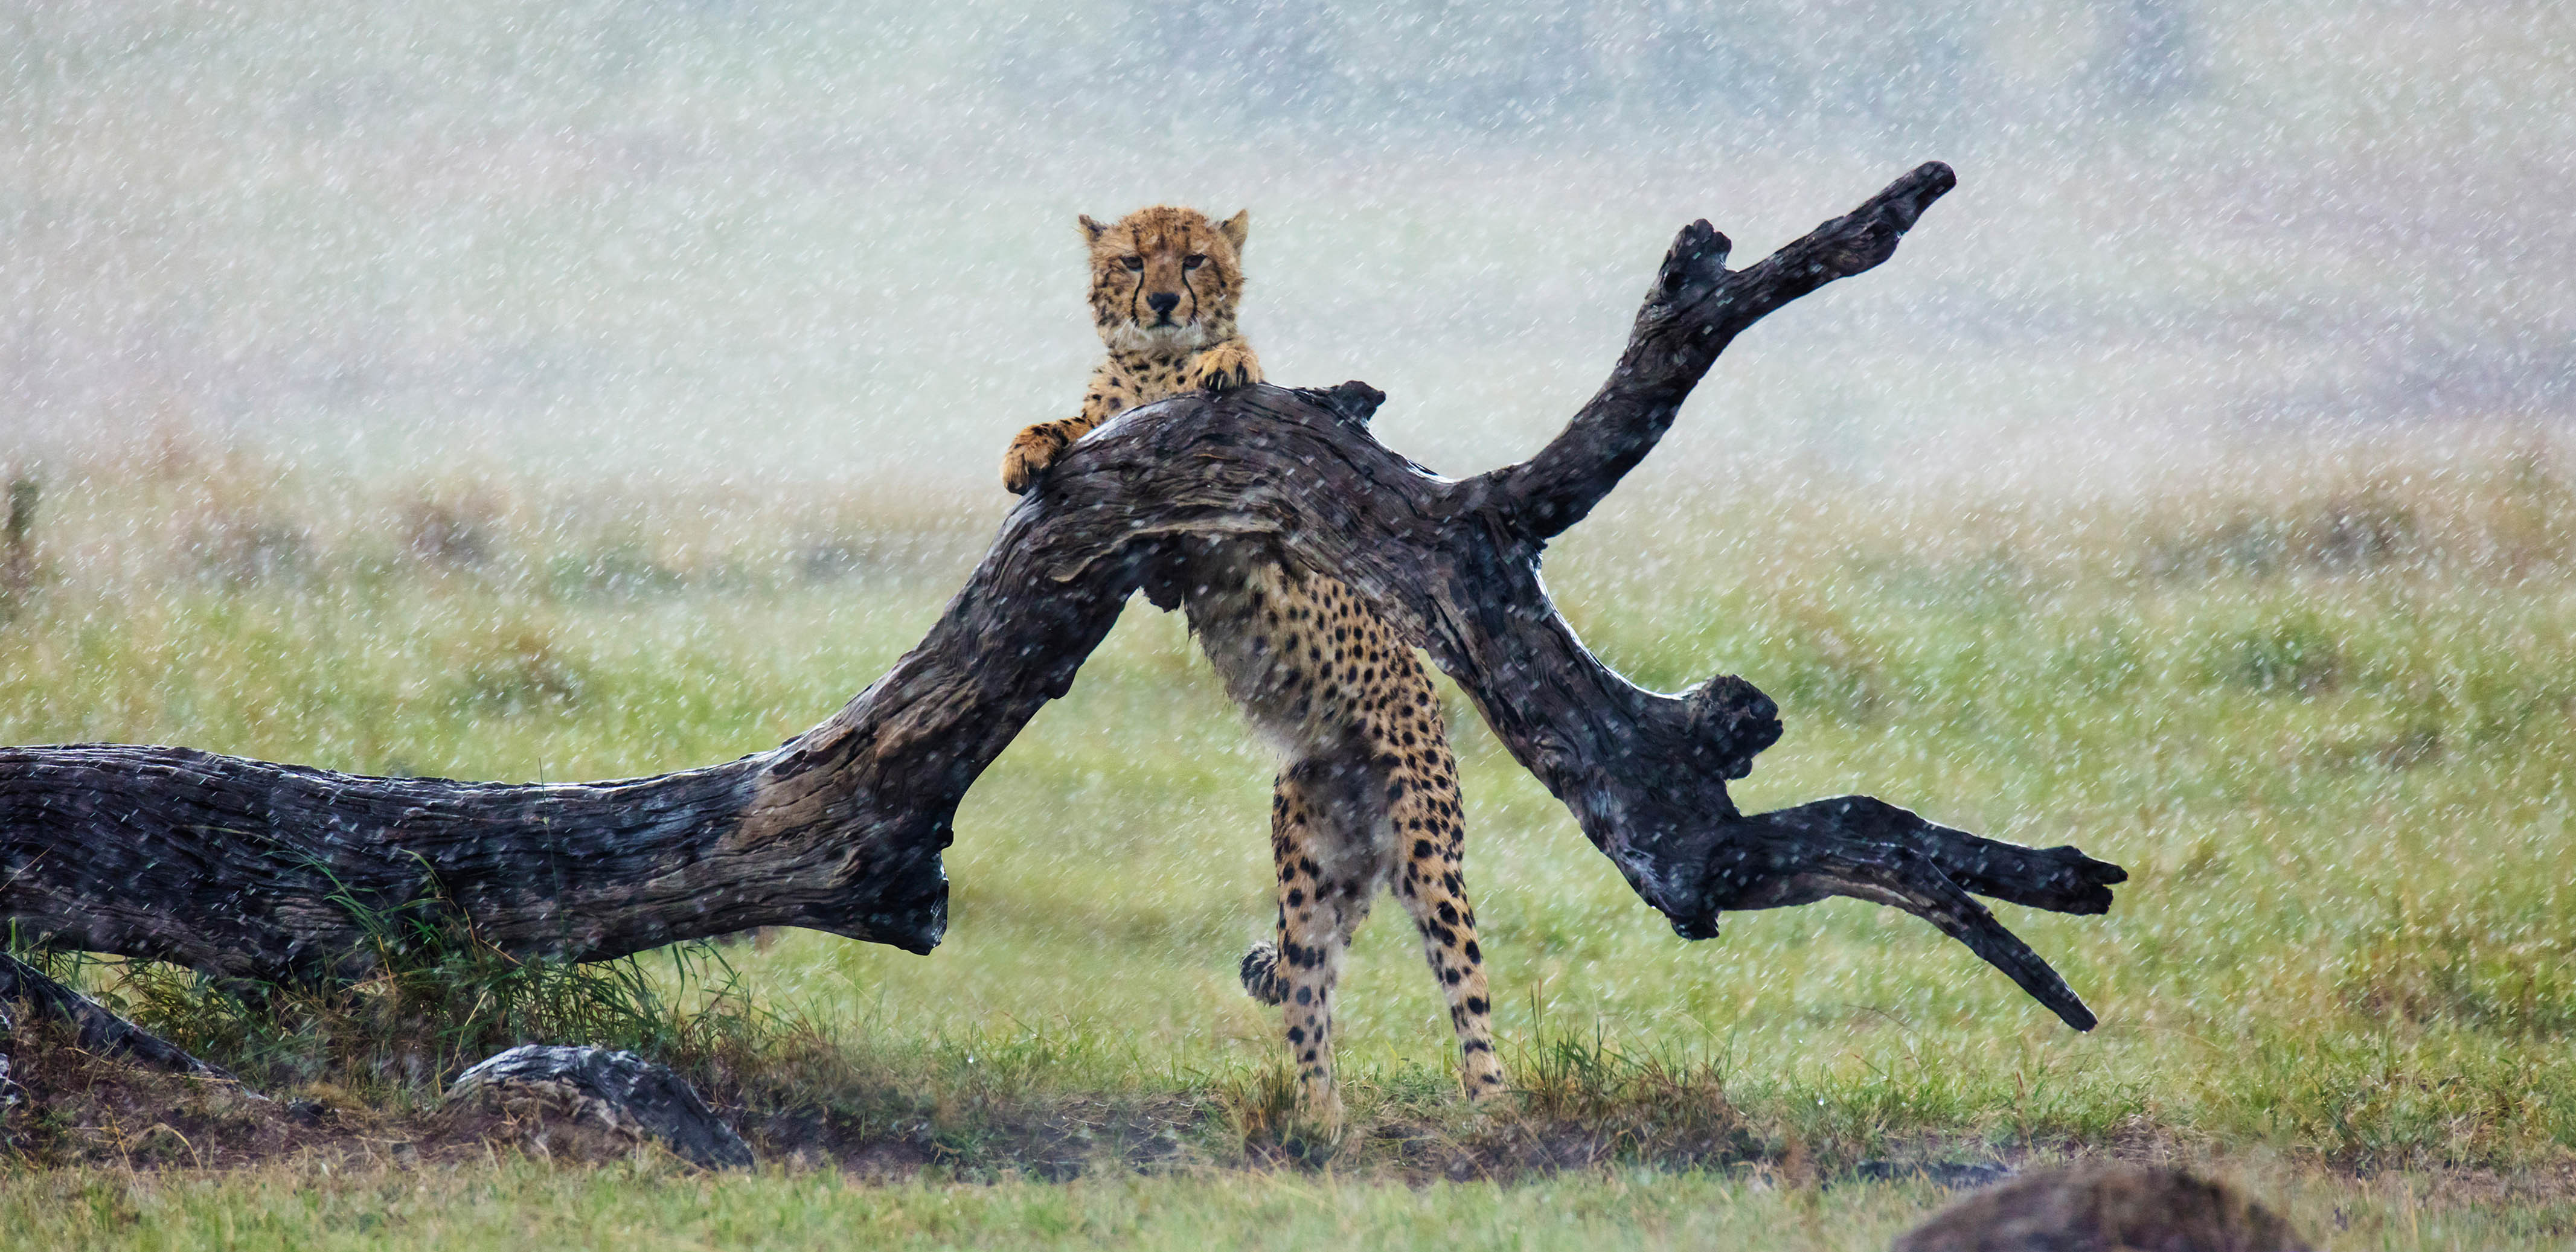 Cheetah standing on a log in heavy rain in Maasai mara as captured by photo tour leader ClementWild